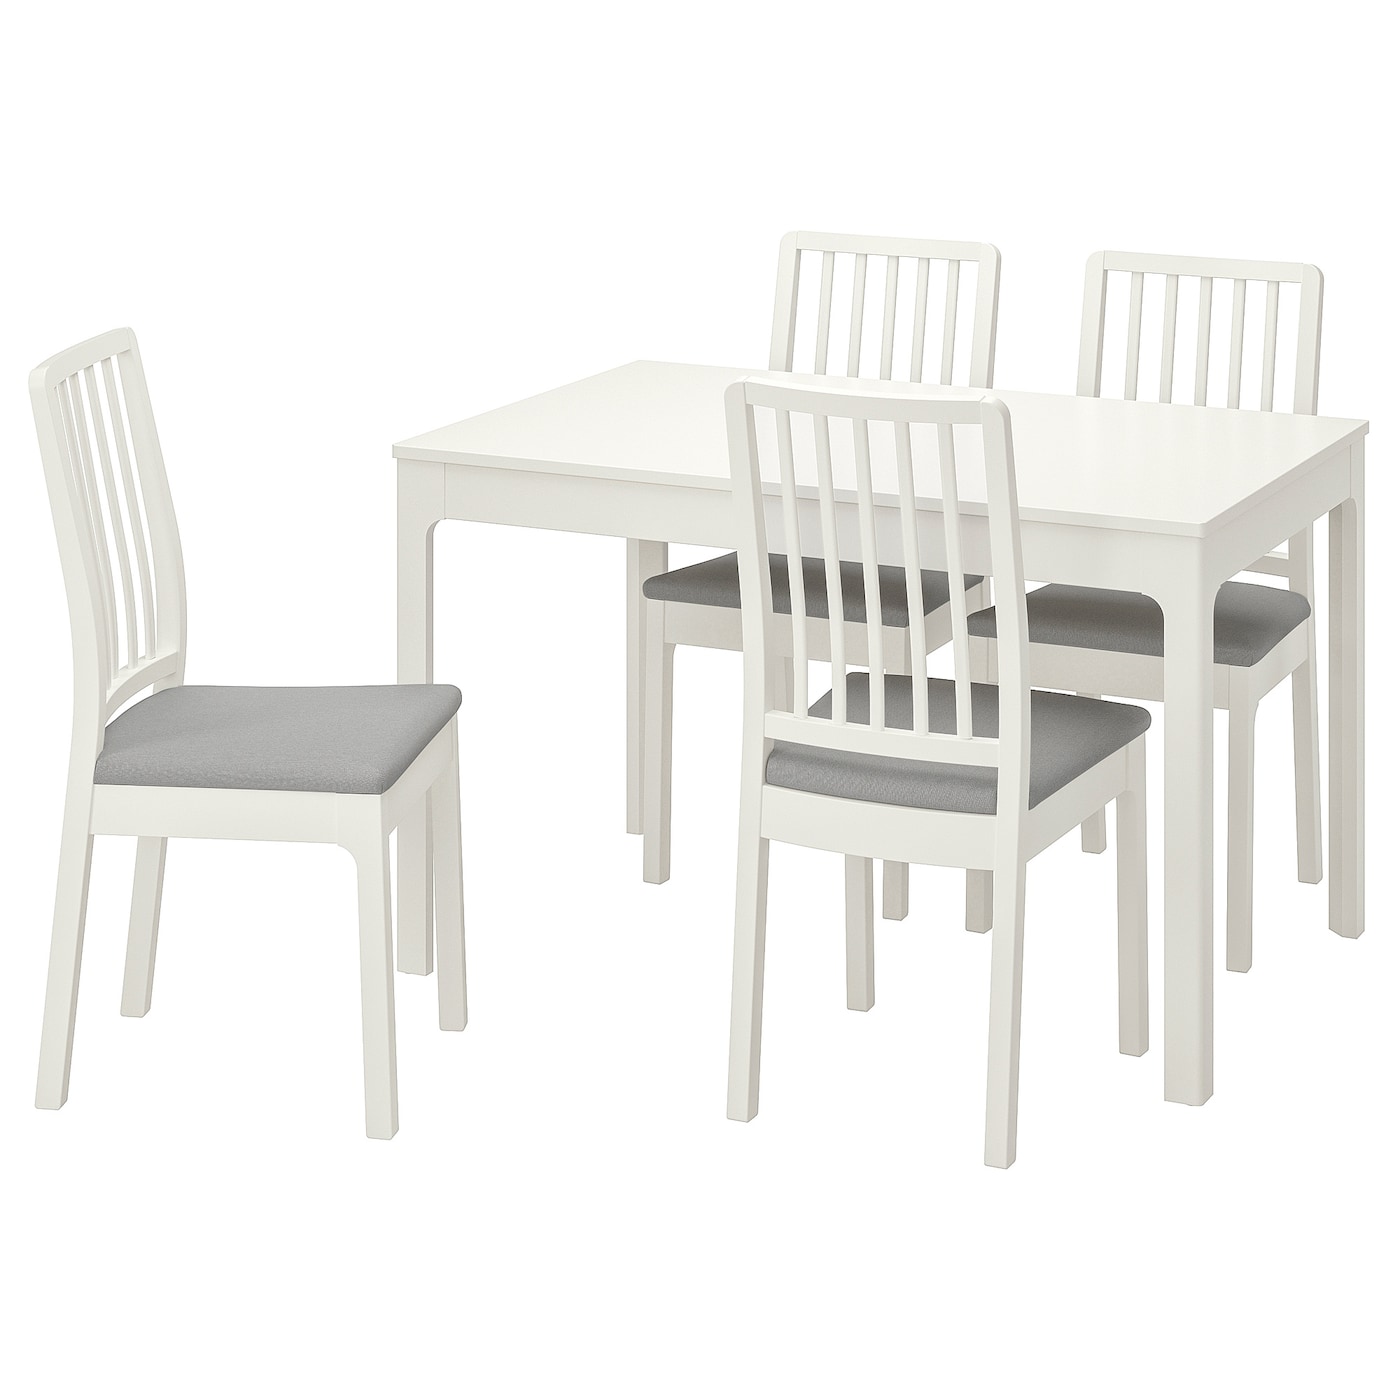 Стол и 4 стула - IKEA EKEDALEN/ЭКЕДАЛЕН ИКЕА, 120/180х80 см, белый/серый